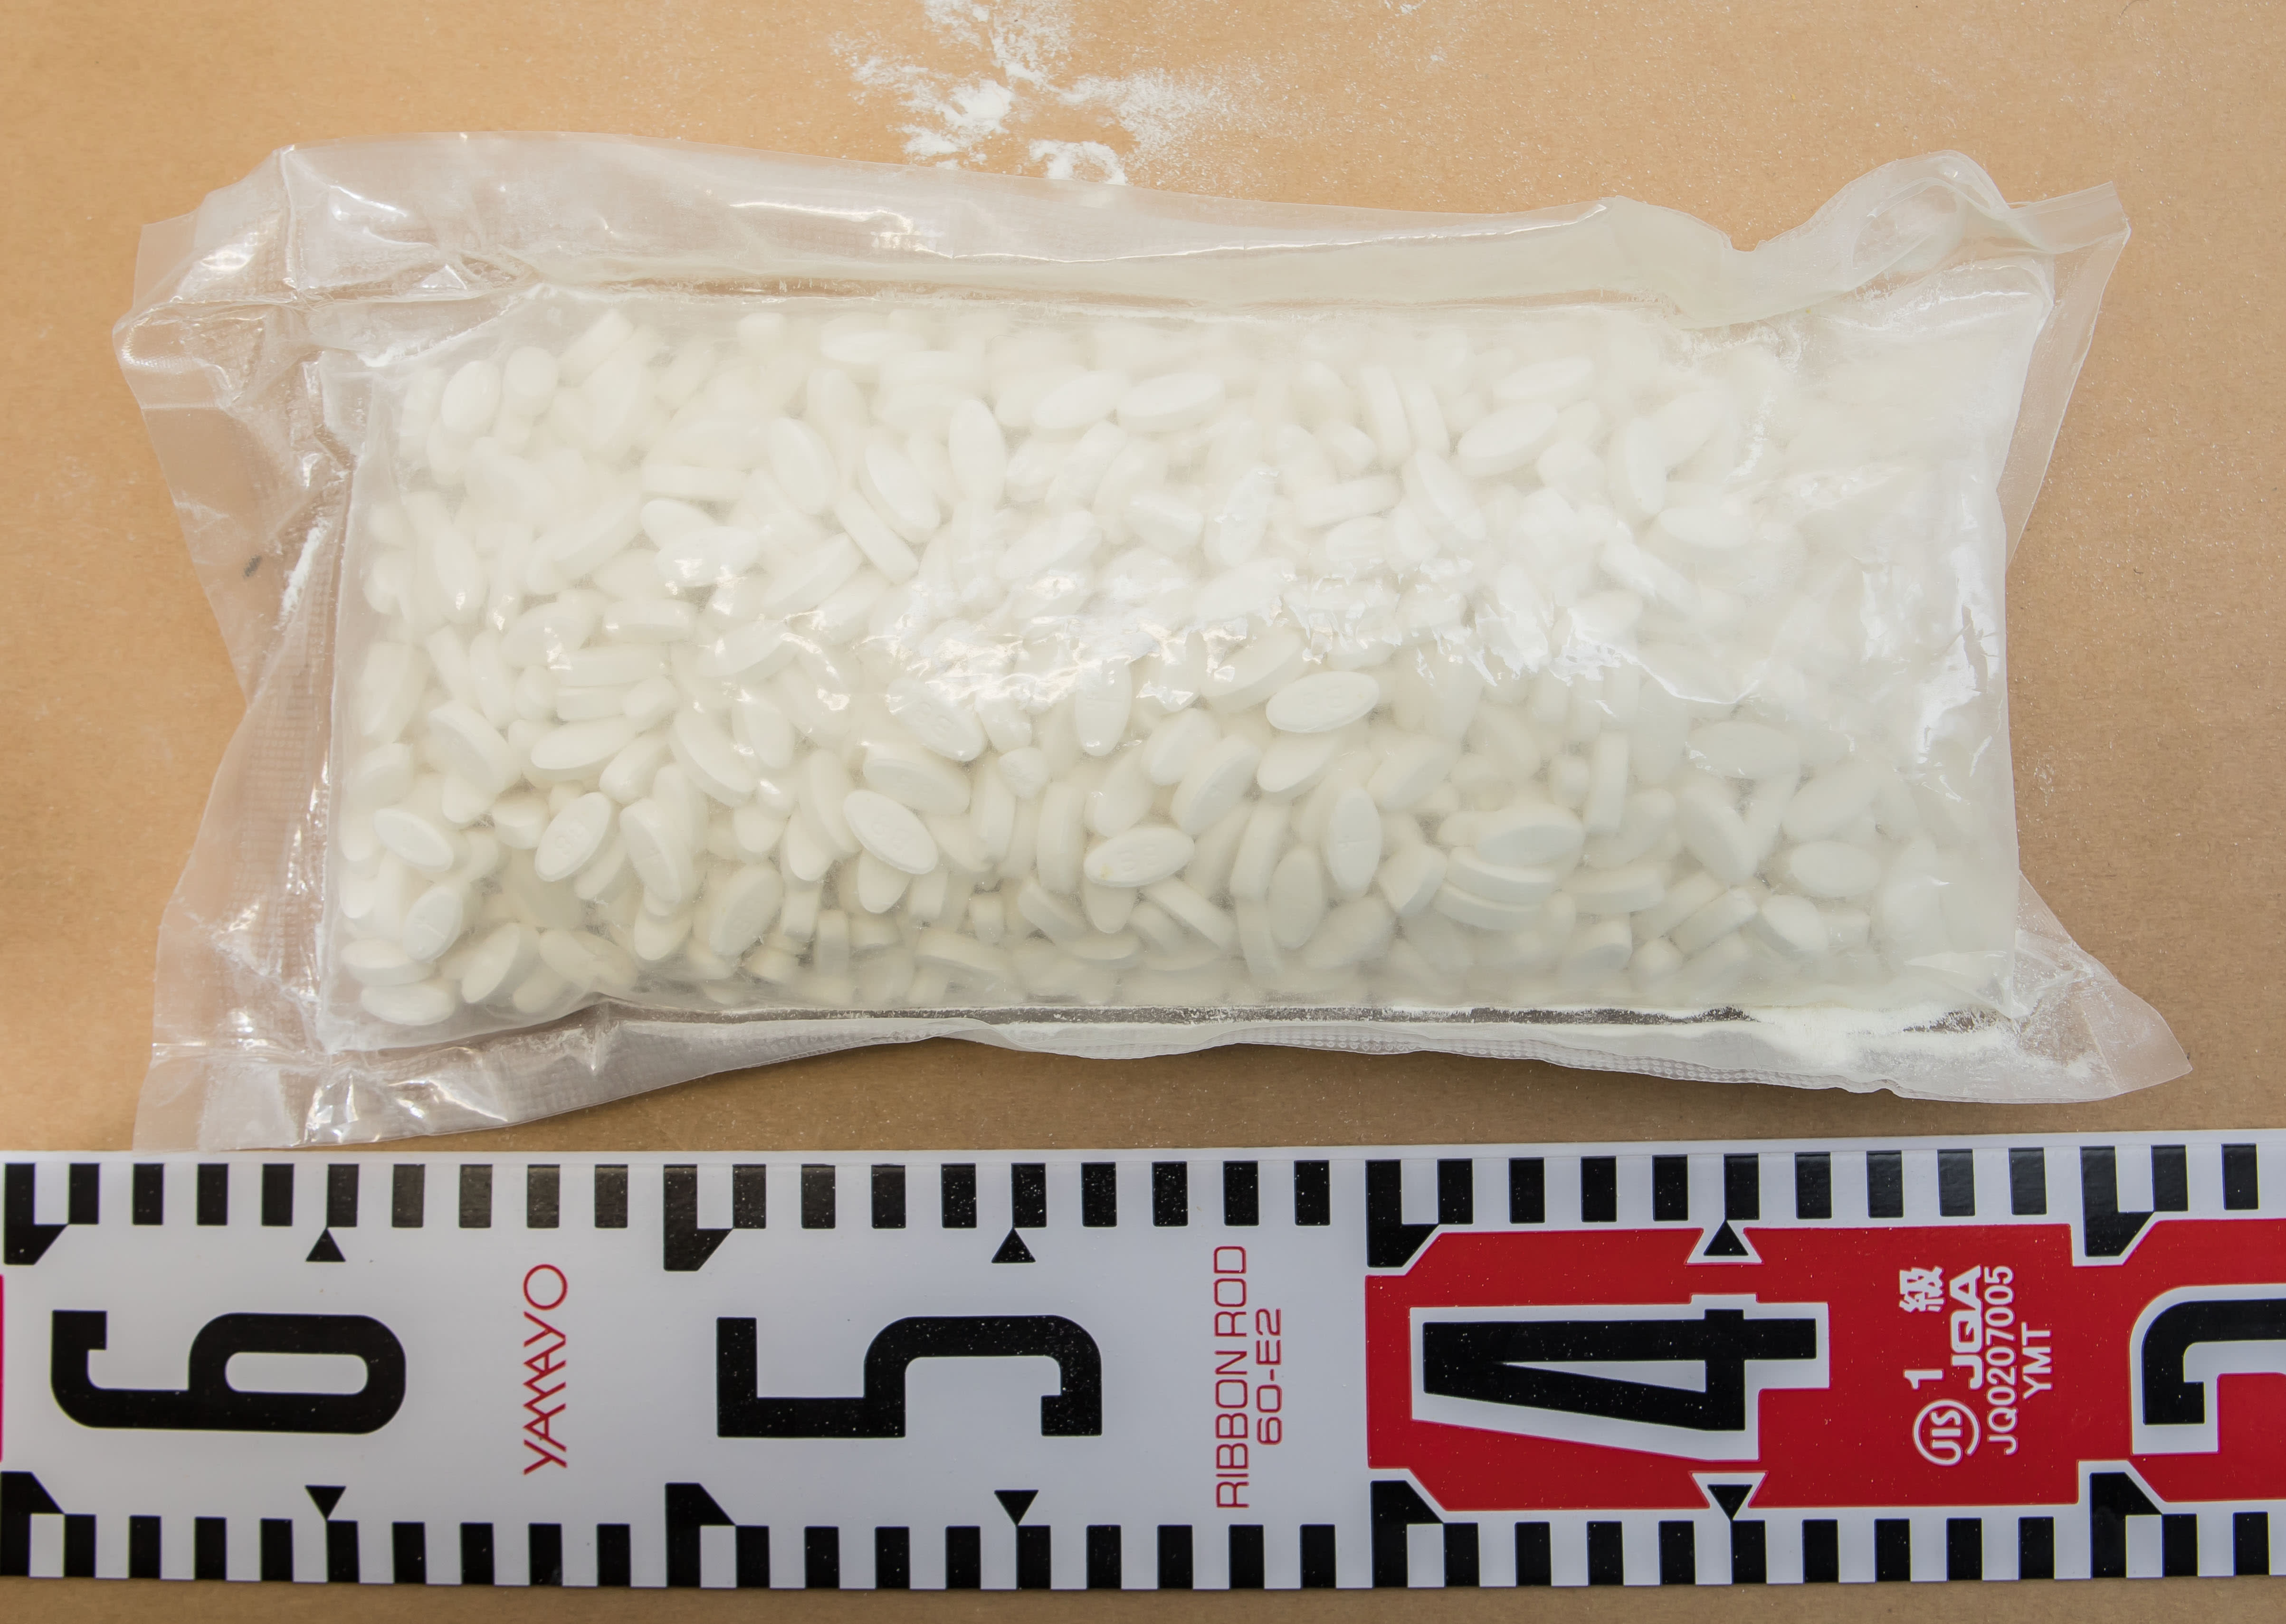 The Helsinki police seized an opioid “more dangerous than fentanyl”.